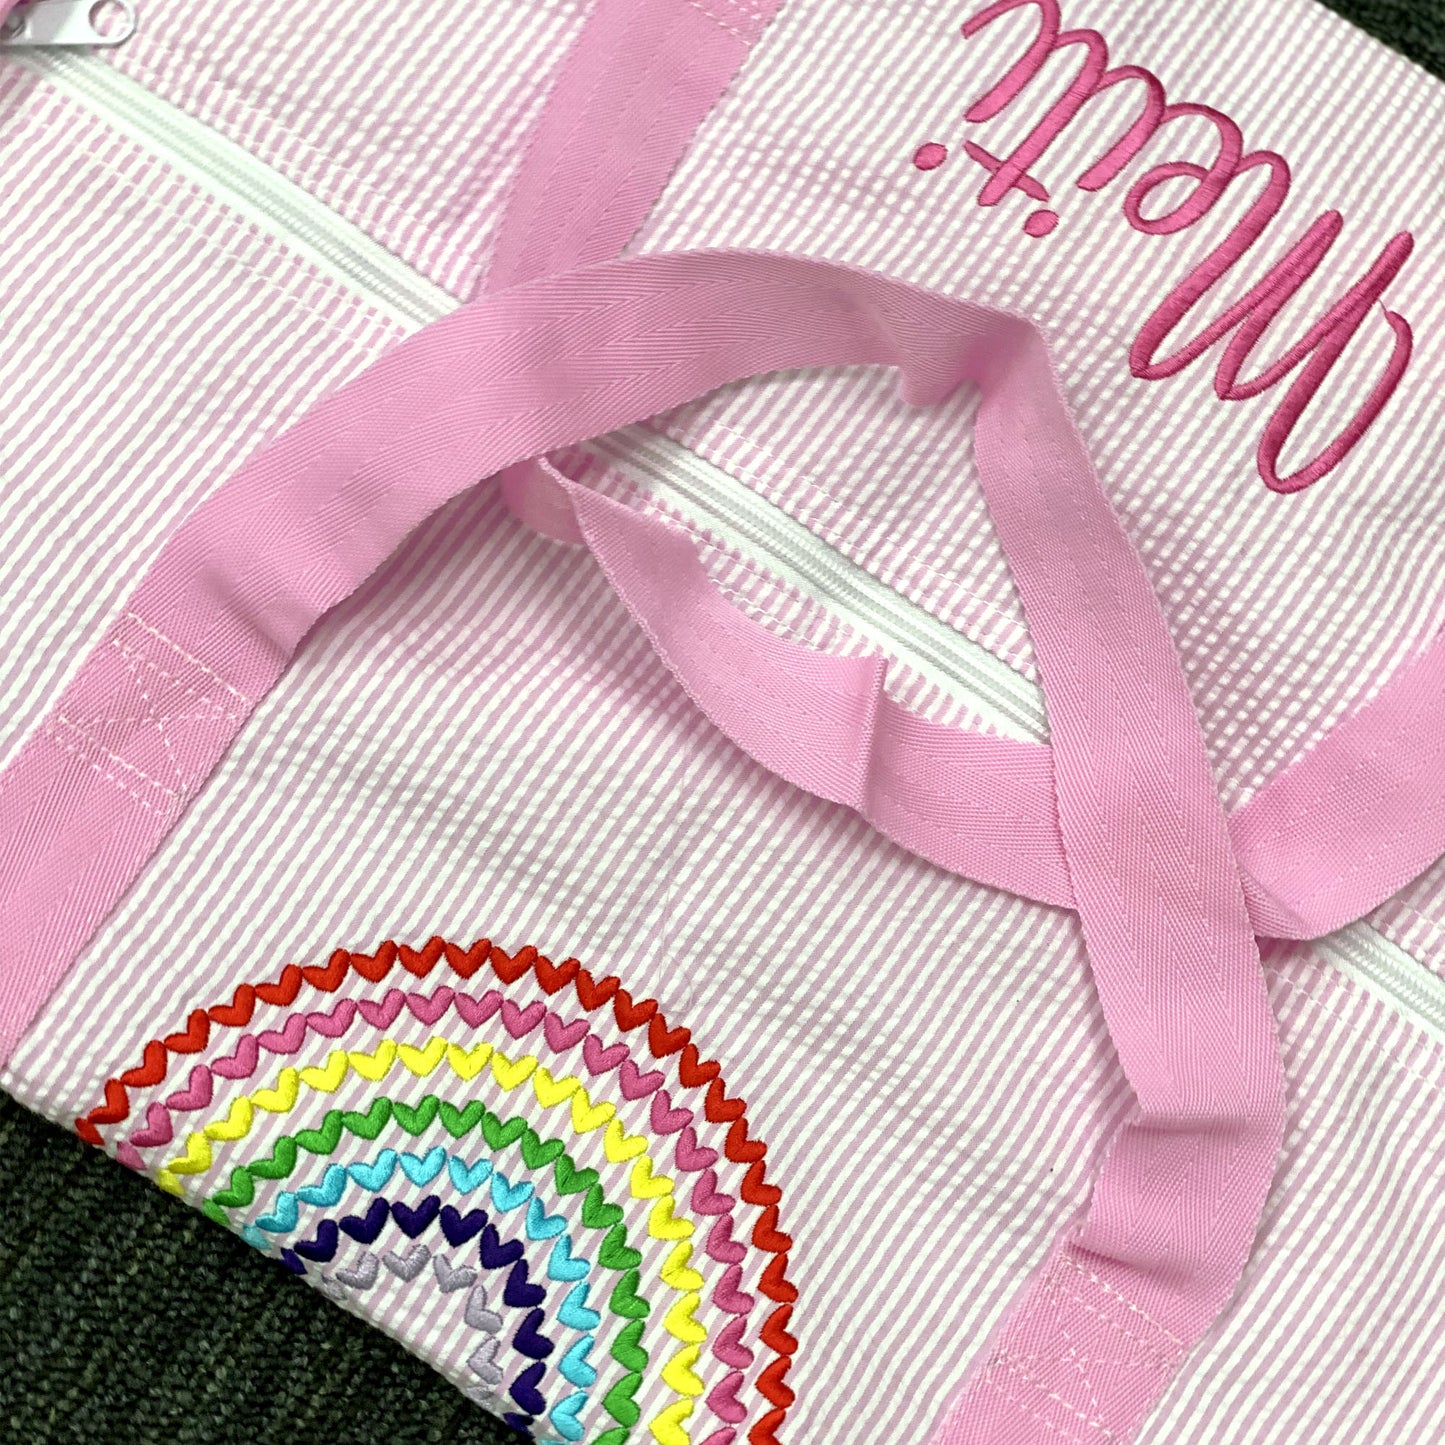 Personalized Seersucker Baby Pink Duffel Bag - Give Wink